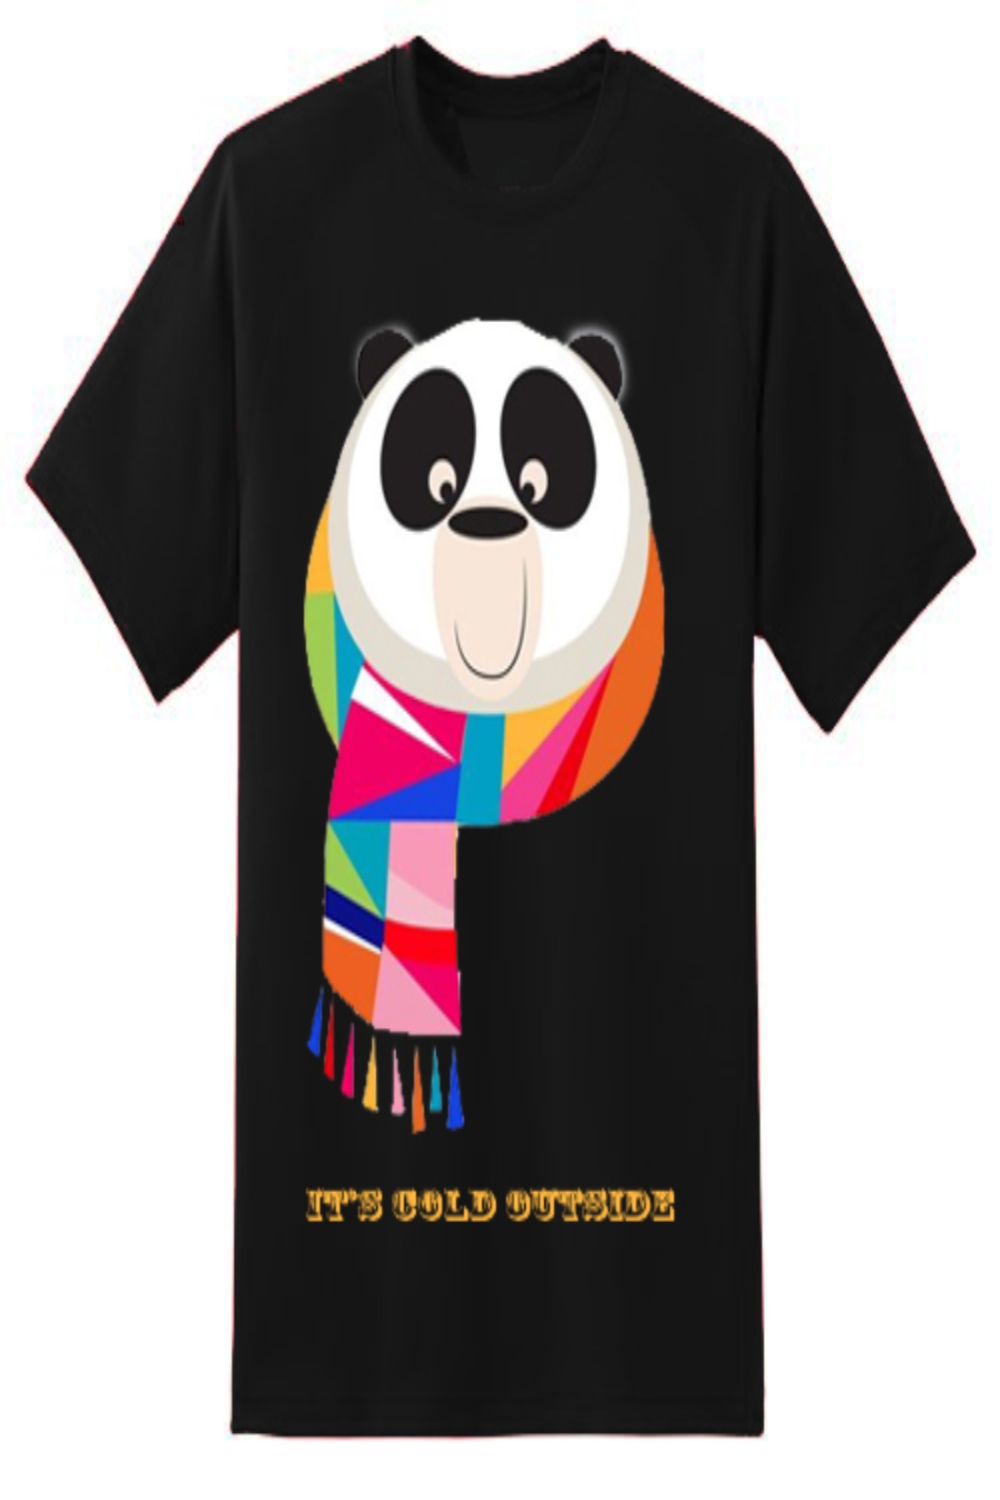 Cute Panda T shirt's Desings in 7 different Colors pinterest preview image.